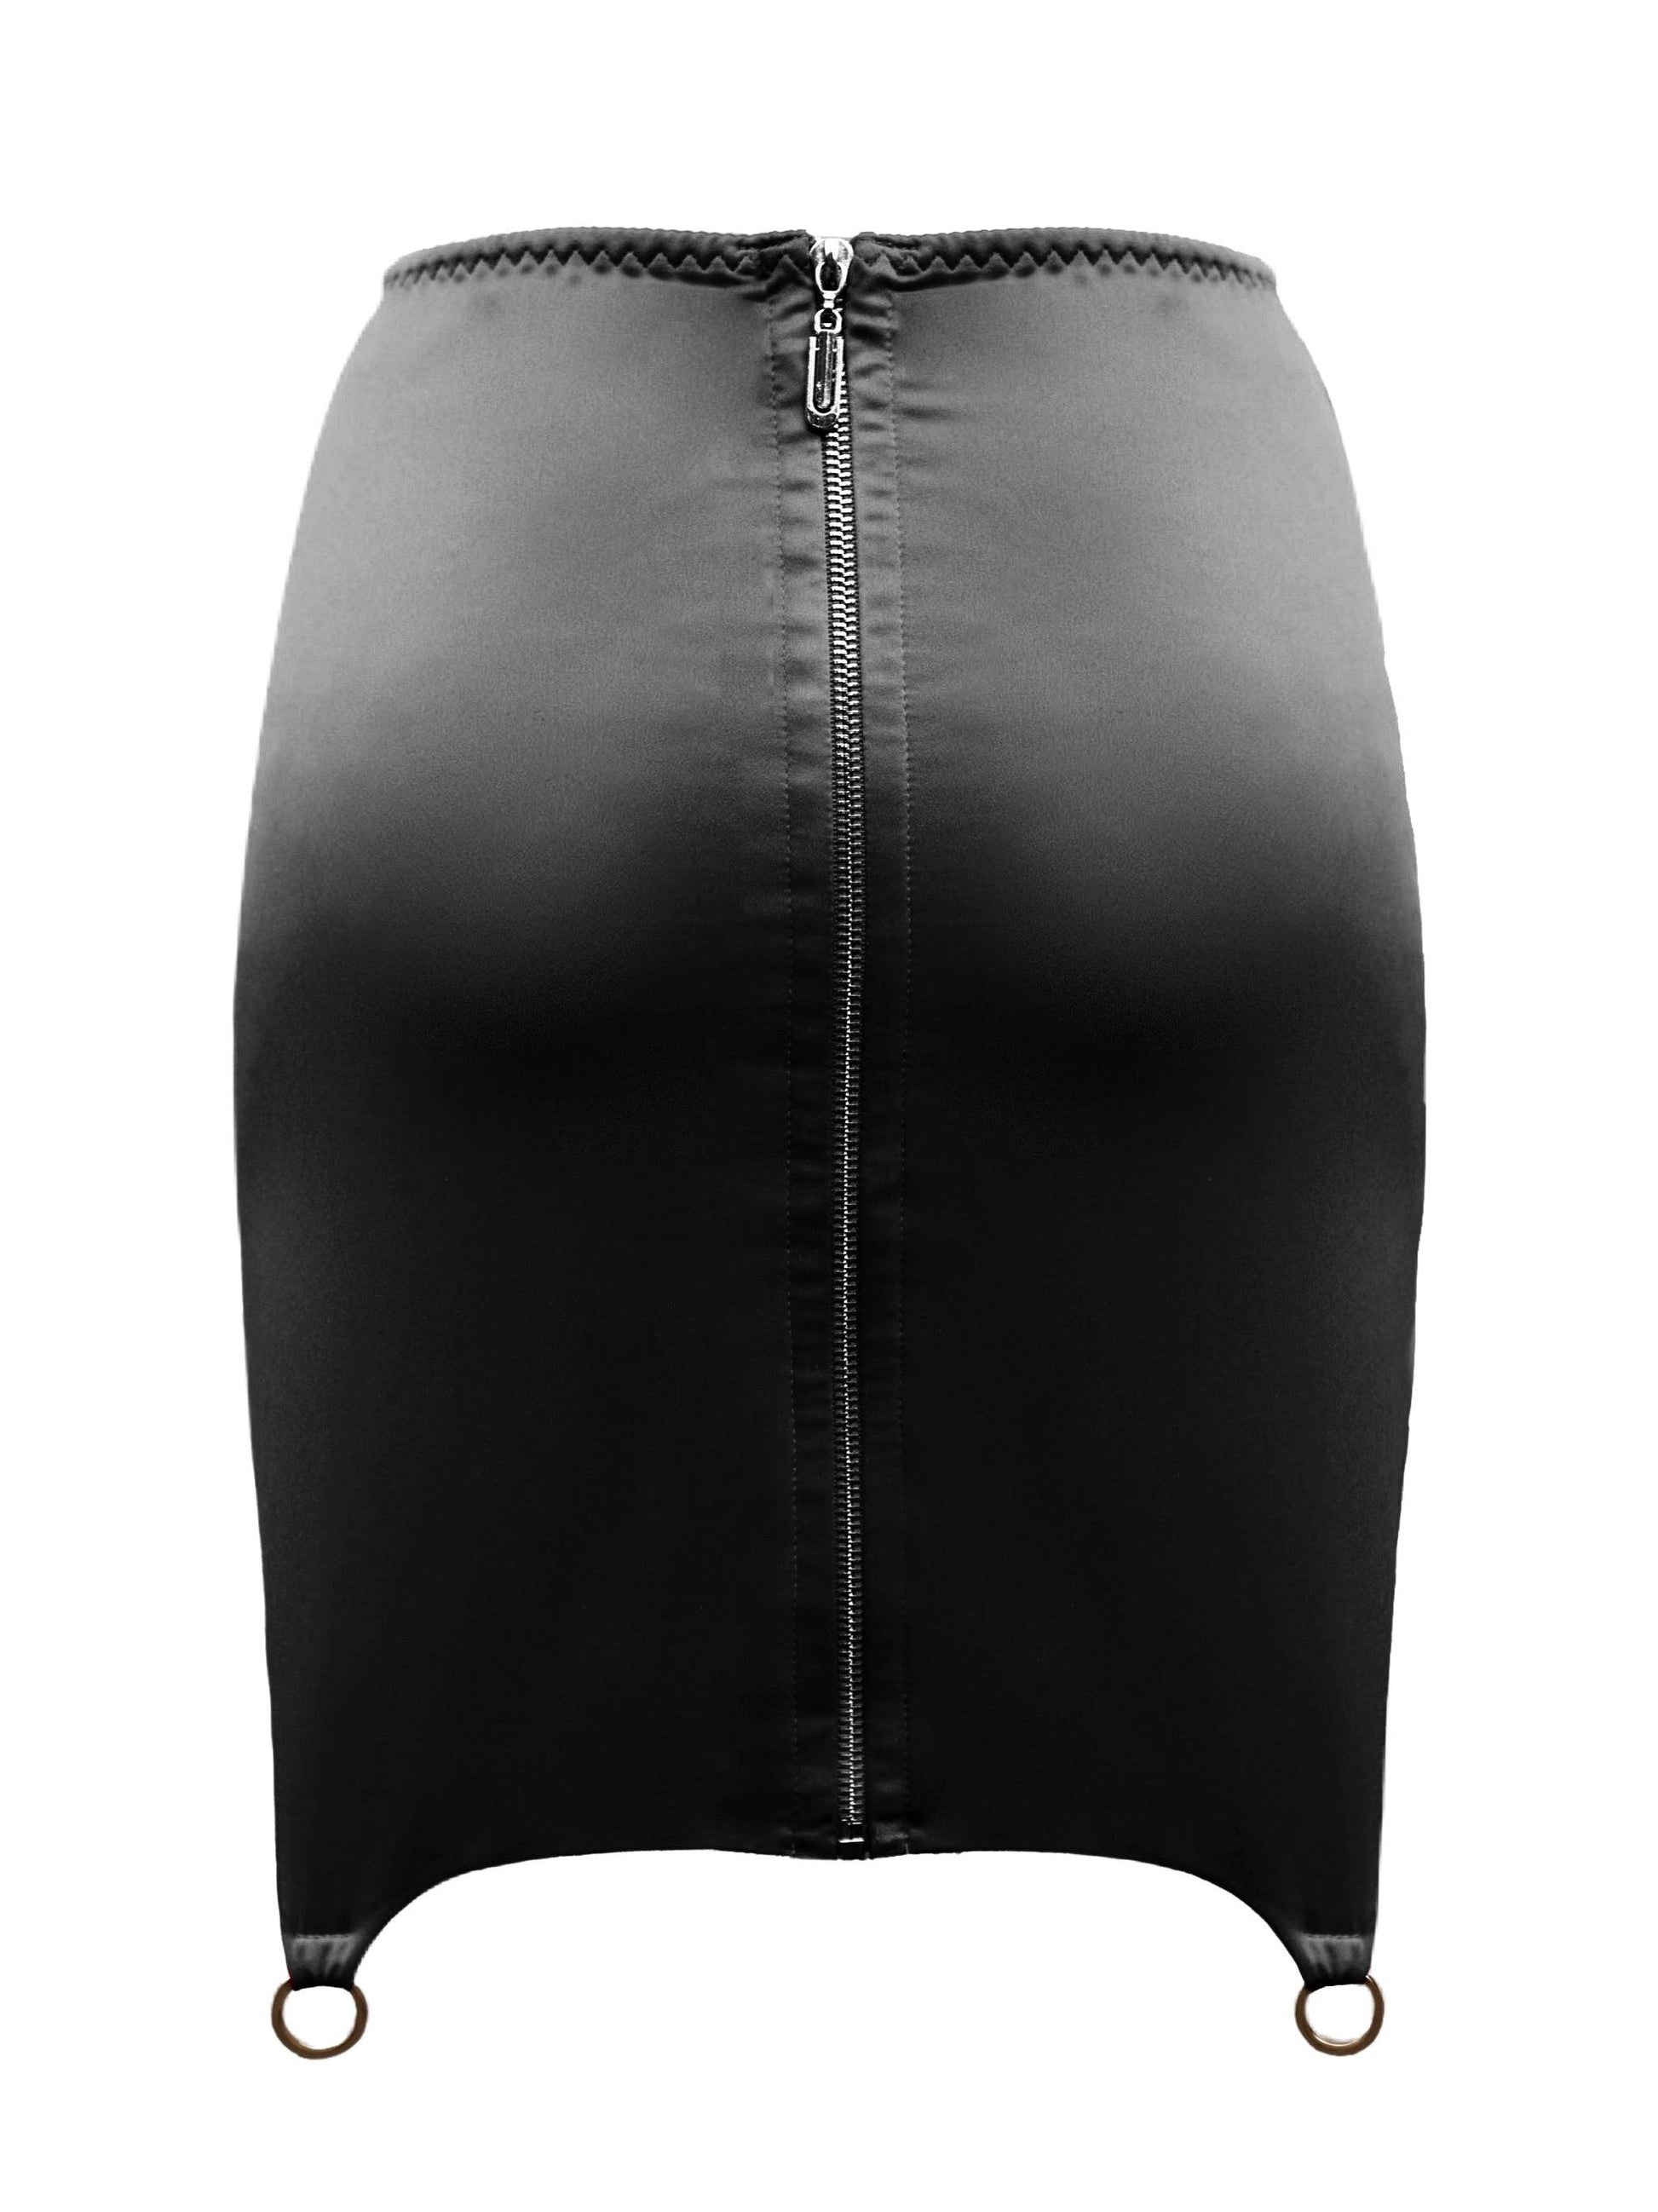 Cymothoe Black skirt - yesUndress